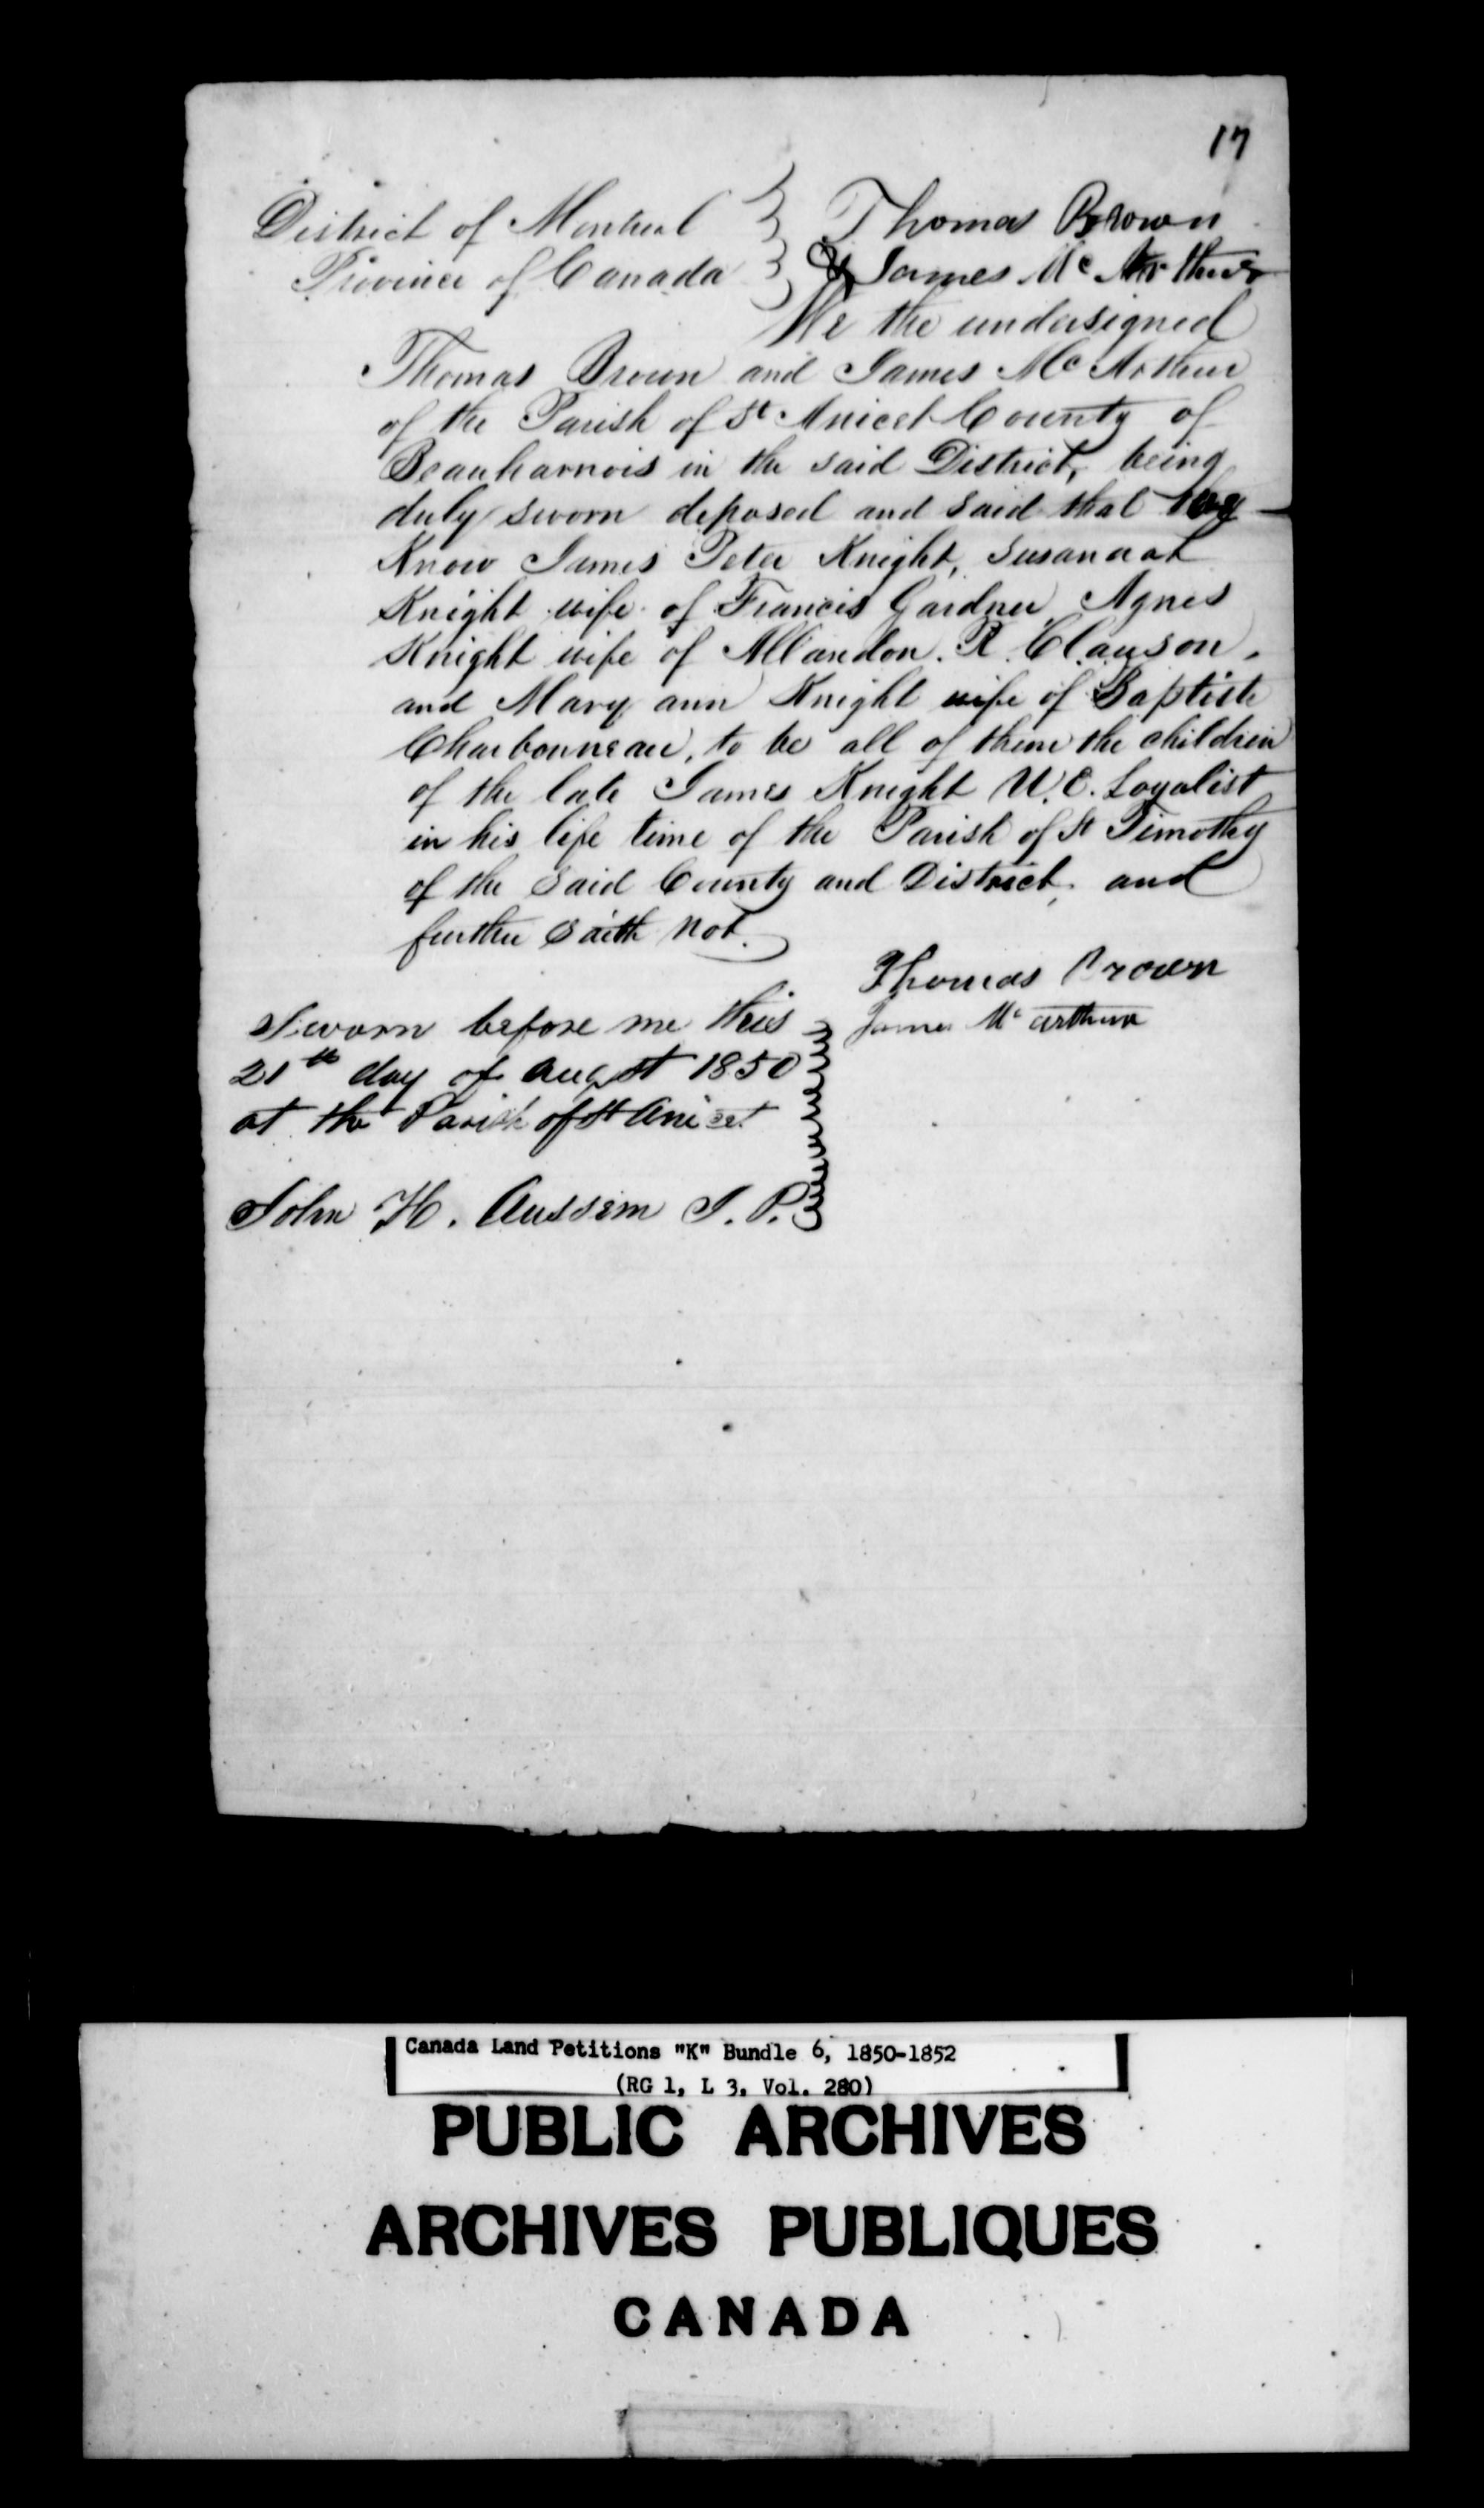 Titre : Demandes de terres du Haut-Canada (1763-1865) - N d'enregistrement Mikan : 205131 - Microforme : c-2123